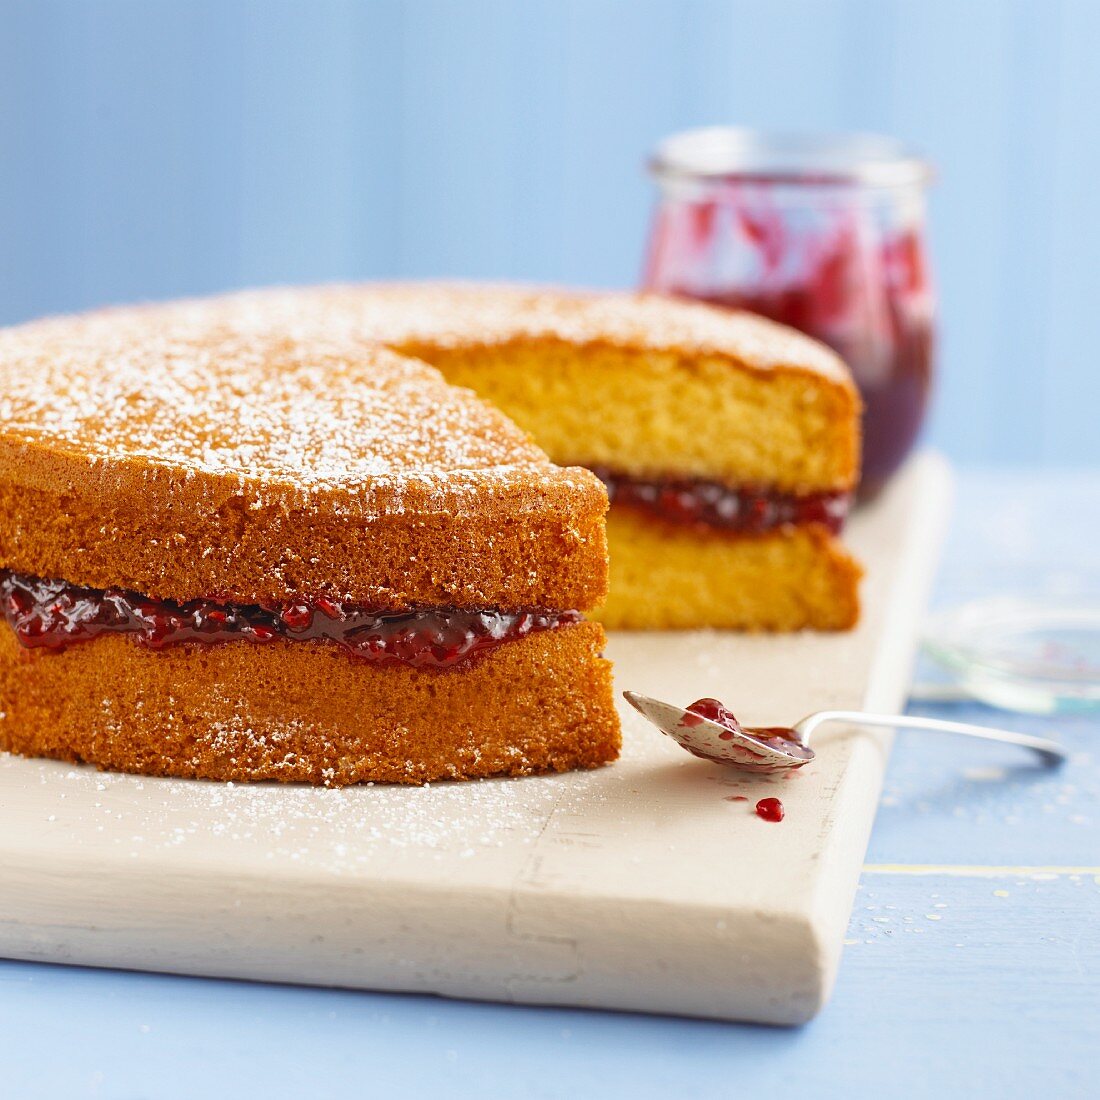 Victoria Sponge cake with jam